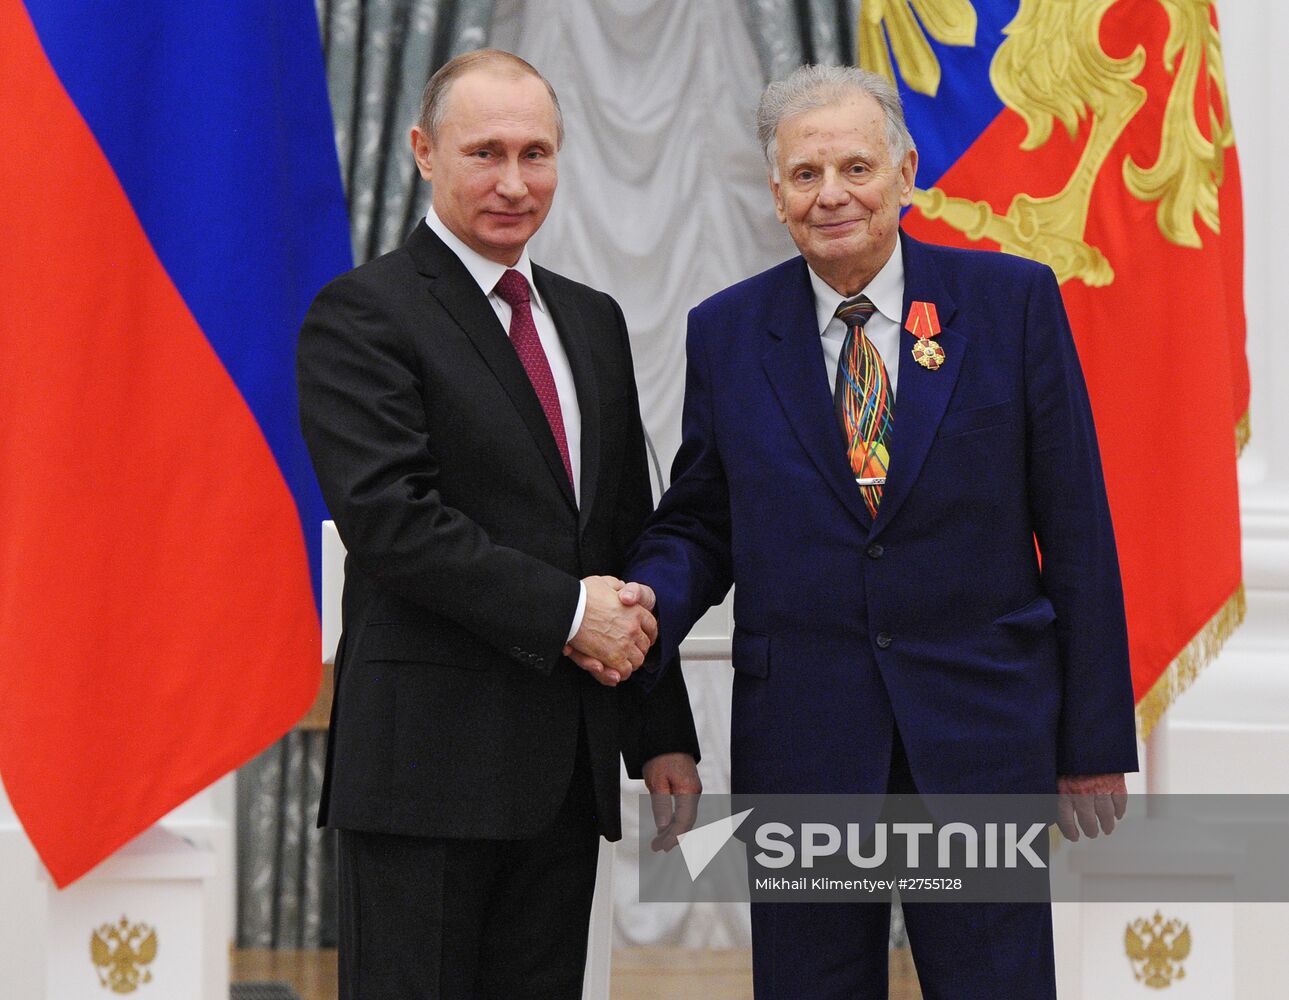 Russian President Vladimir Putin presents state awards